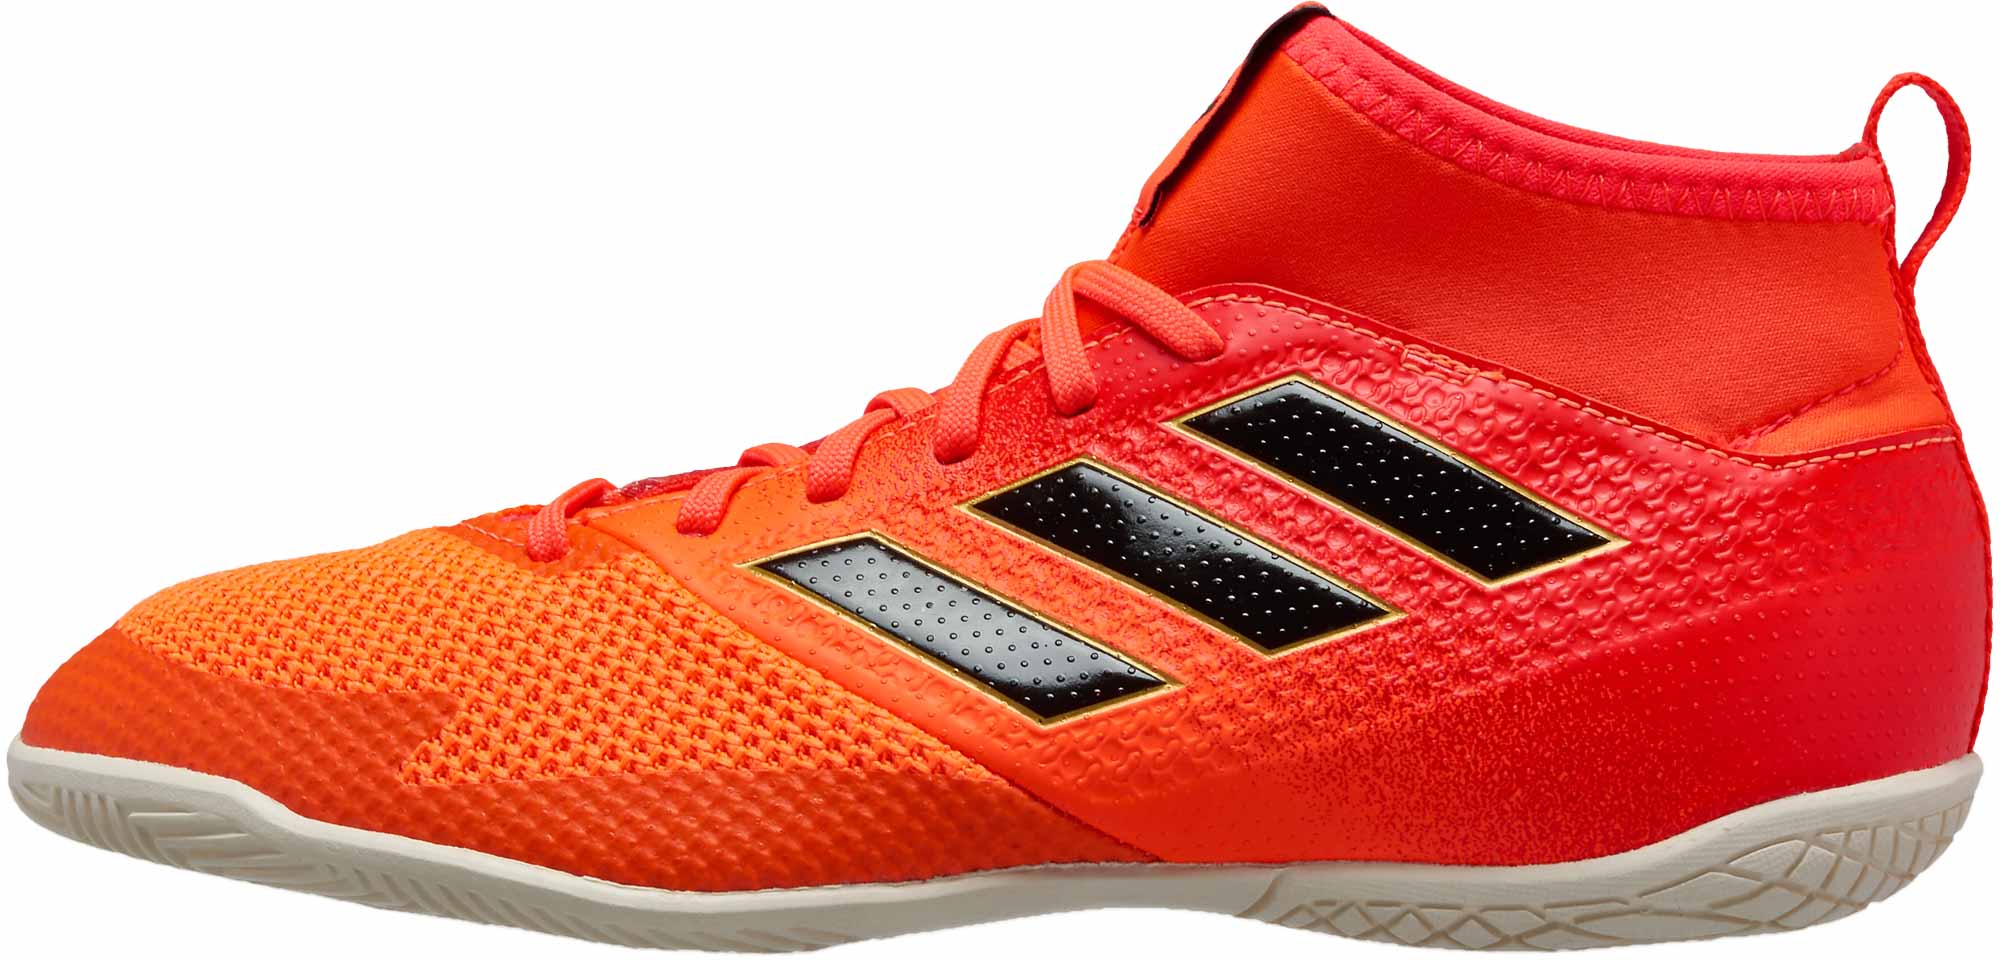 adidas Kids ACE Tango 17.3 IN - Solar Red & Solar Orange - Soccer Master